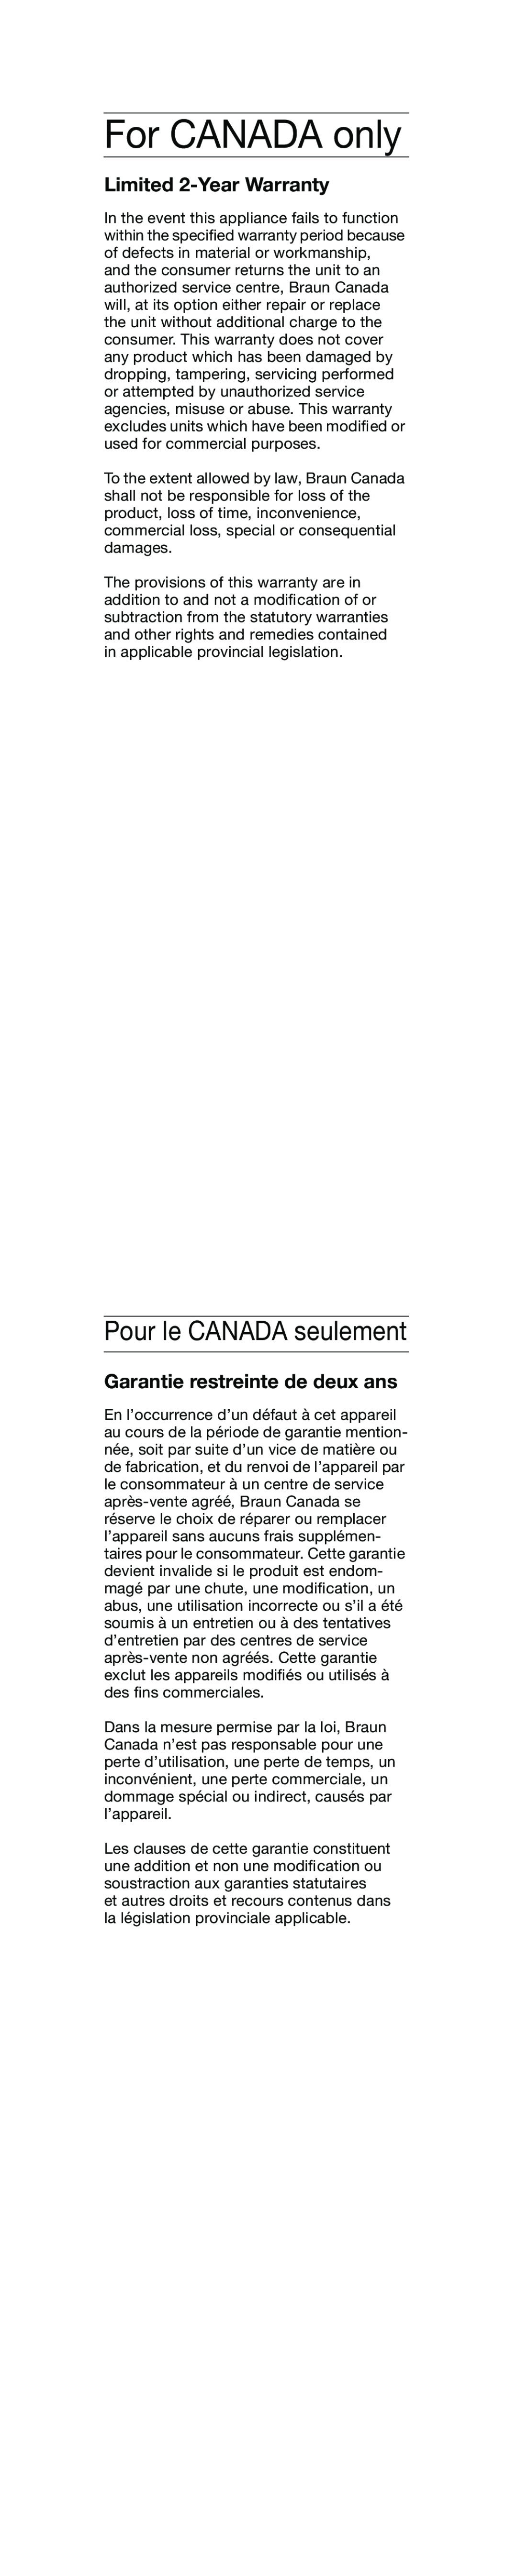 Braun 4728 manual For CANADA only, Pour le CANADA seulement, Garantie restreinte de deux ans, Limited 2-Year Warranty 